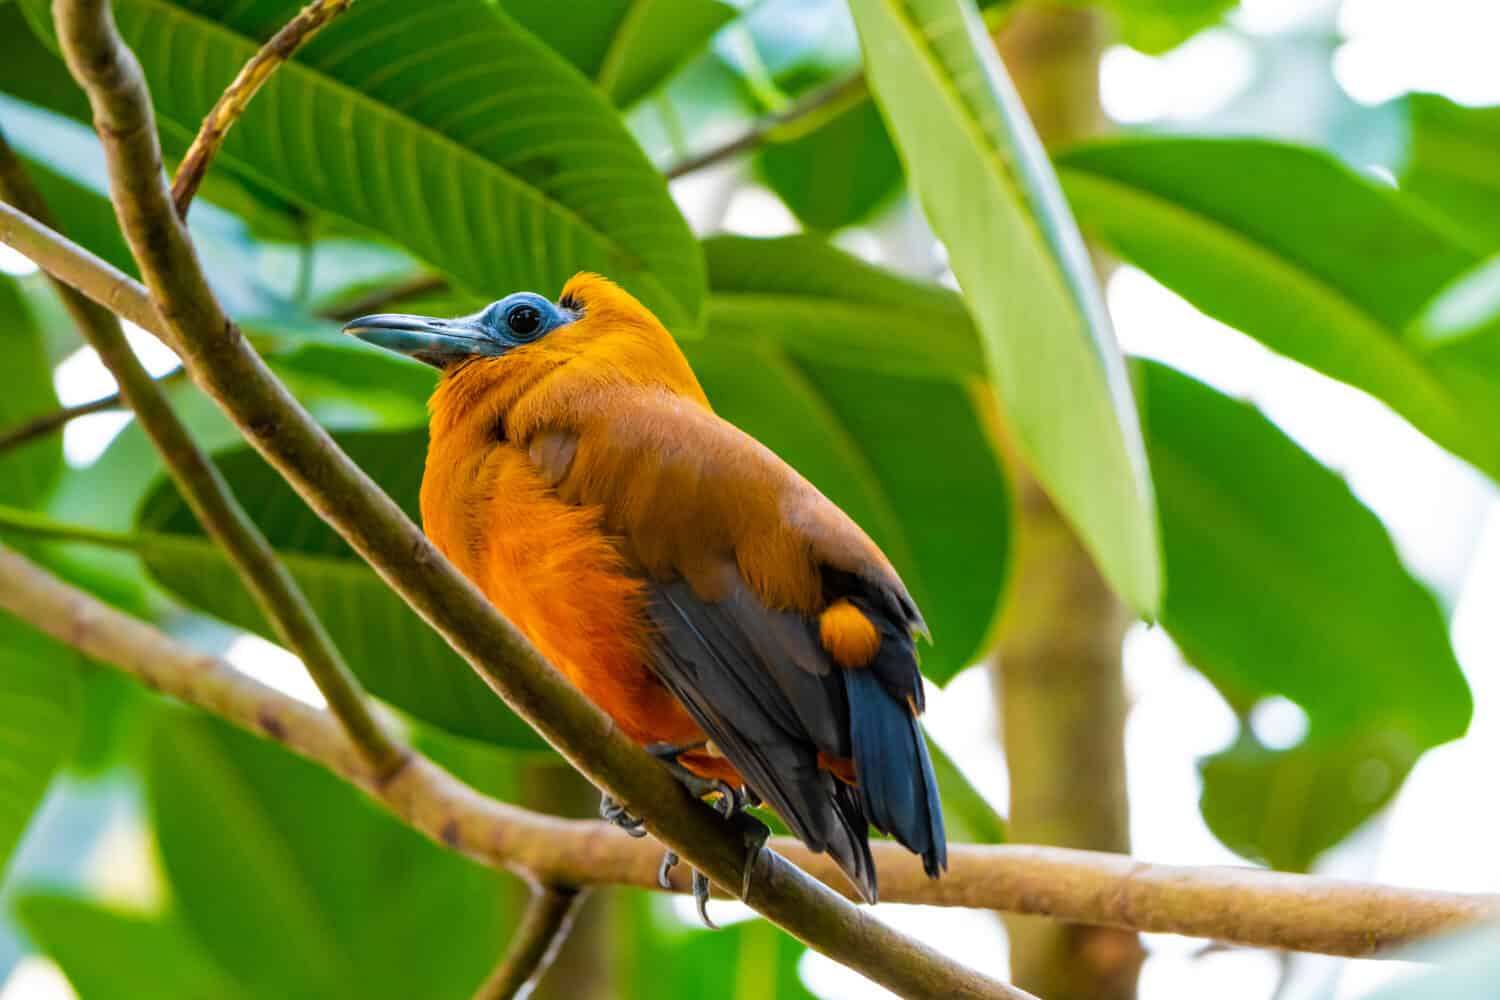 Tropical Bird Capuchinbird Or Calfbird - Perissocephalus Tricolor In The Rainforest. Bird is sitting on tree trunk.